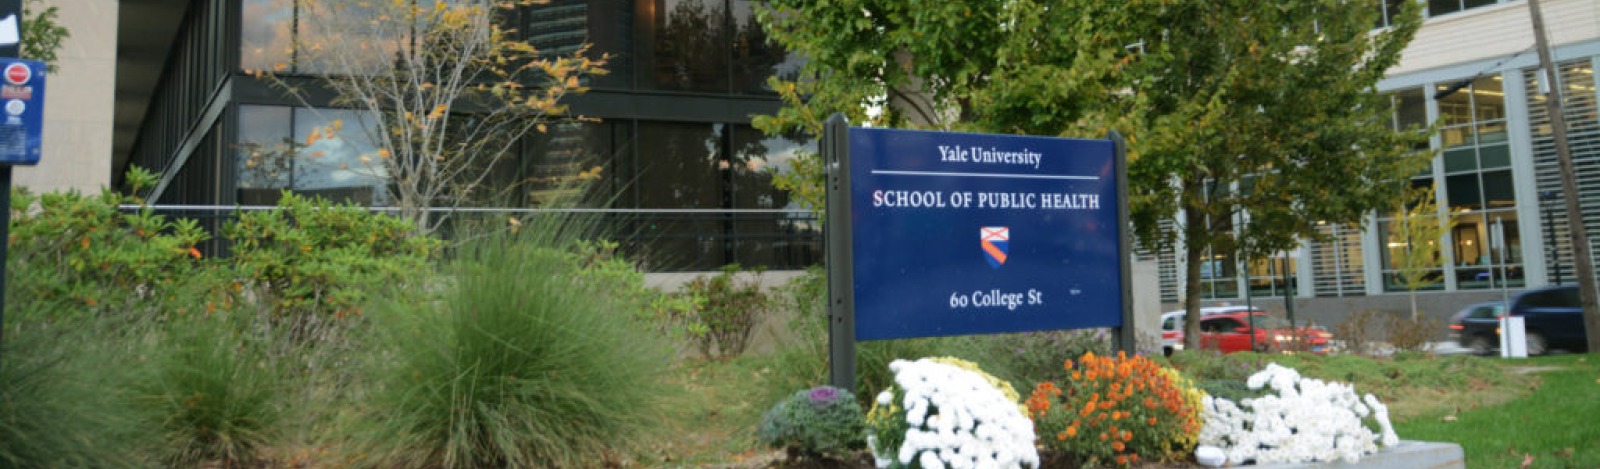 Yale School Of Medicine Building Signage